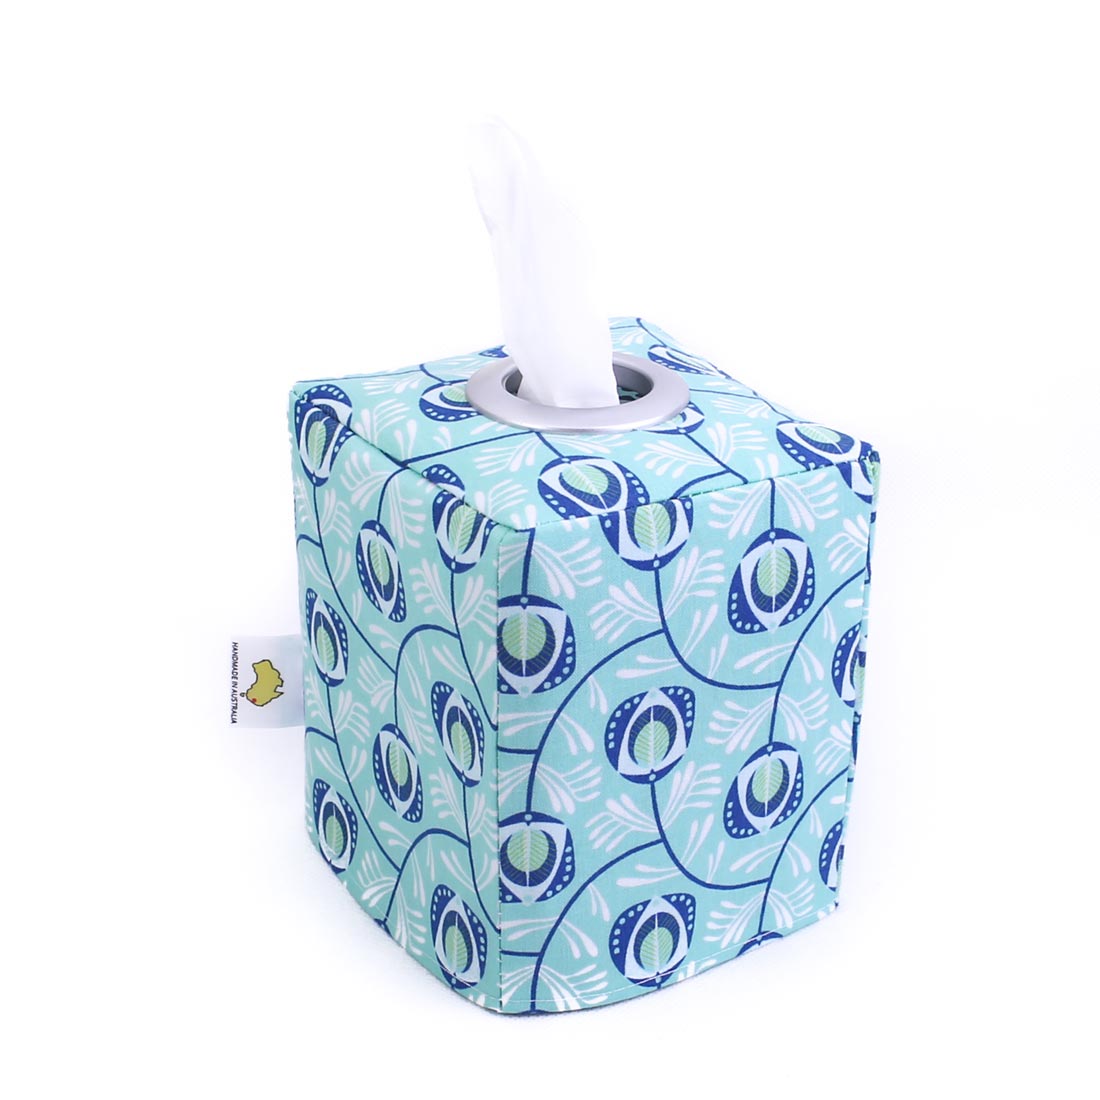 square-tissue-box-cover-art-deco-geometric-floral-print-mimi-handmade-australia